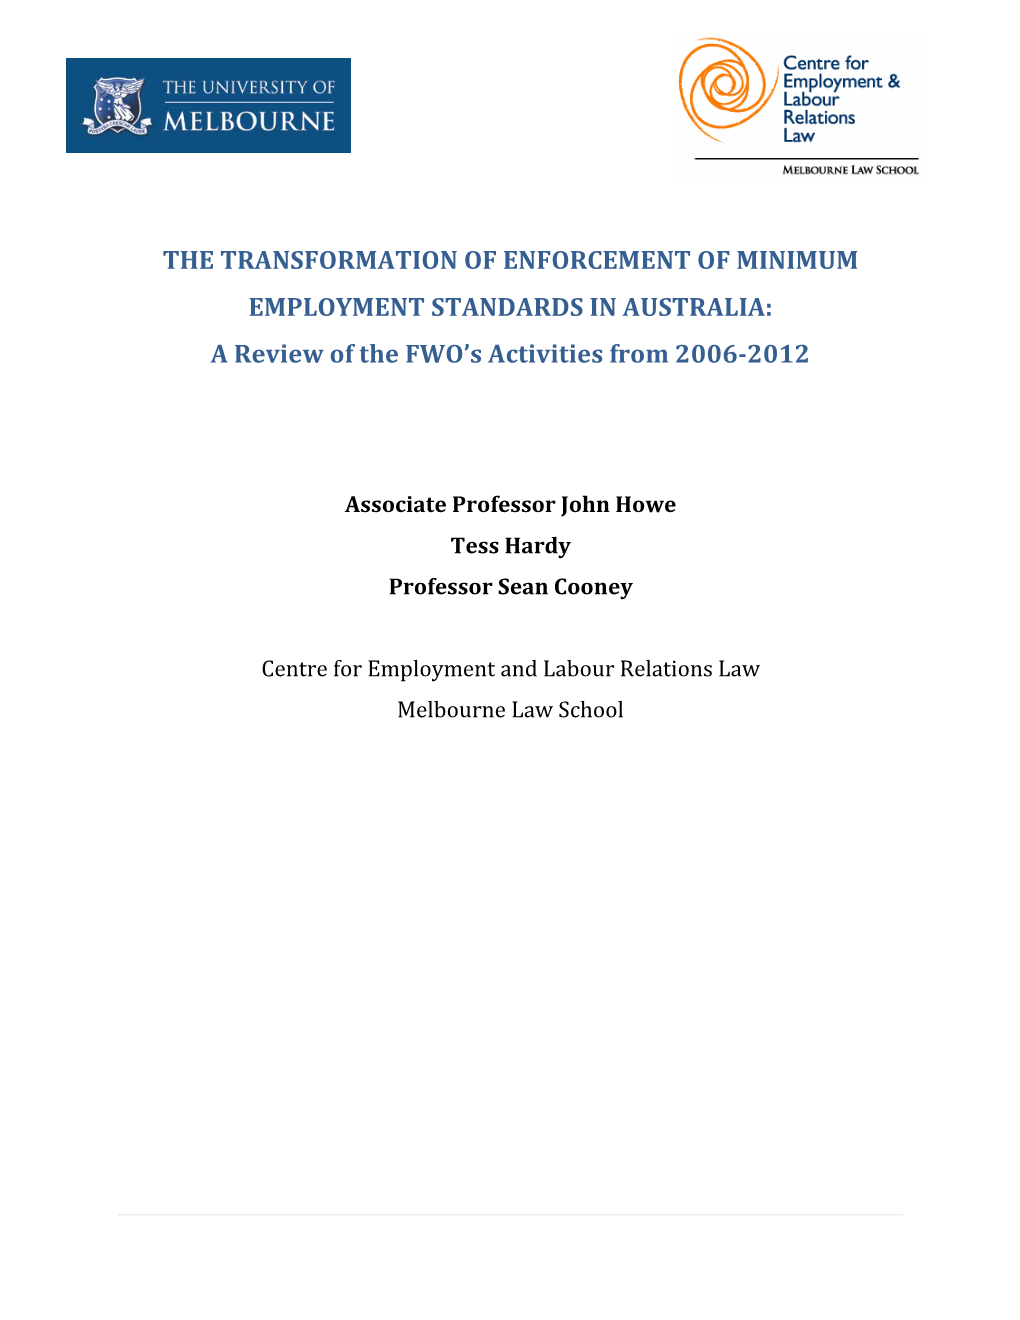 The Transformation of Enforcement of Minimum Employment Standards in Australia